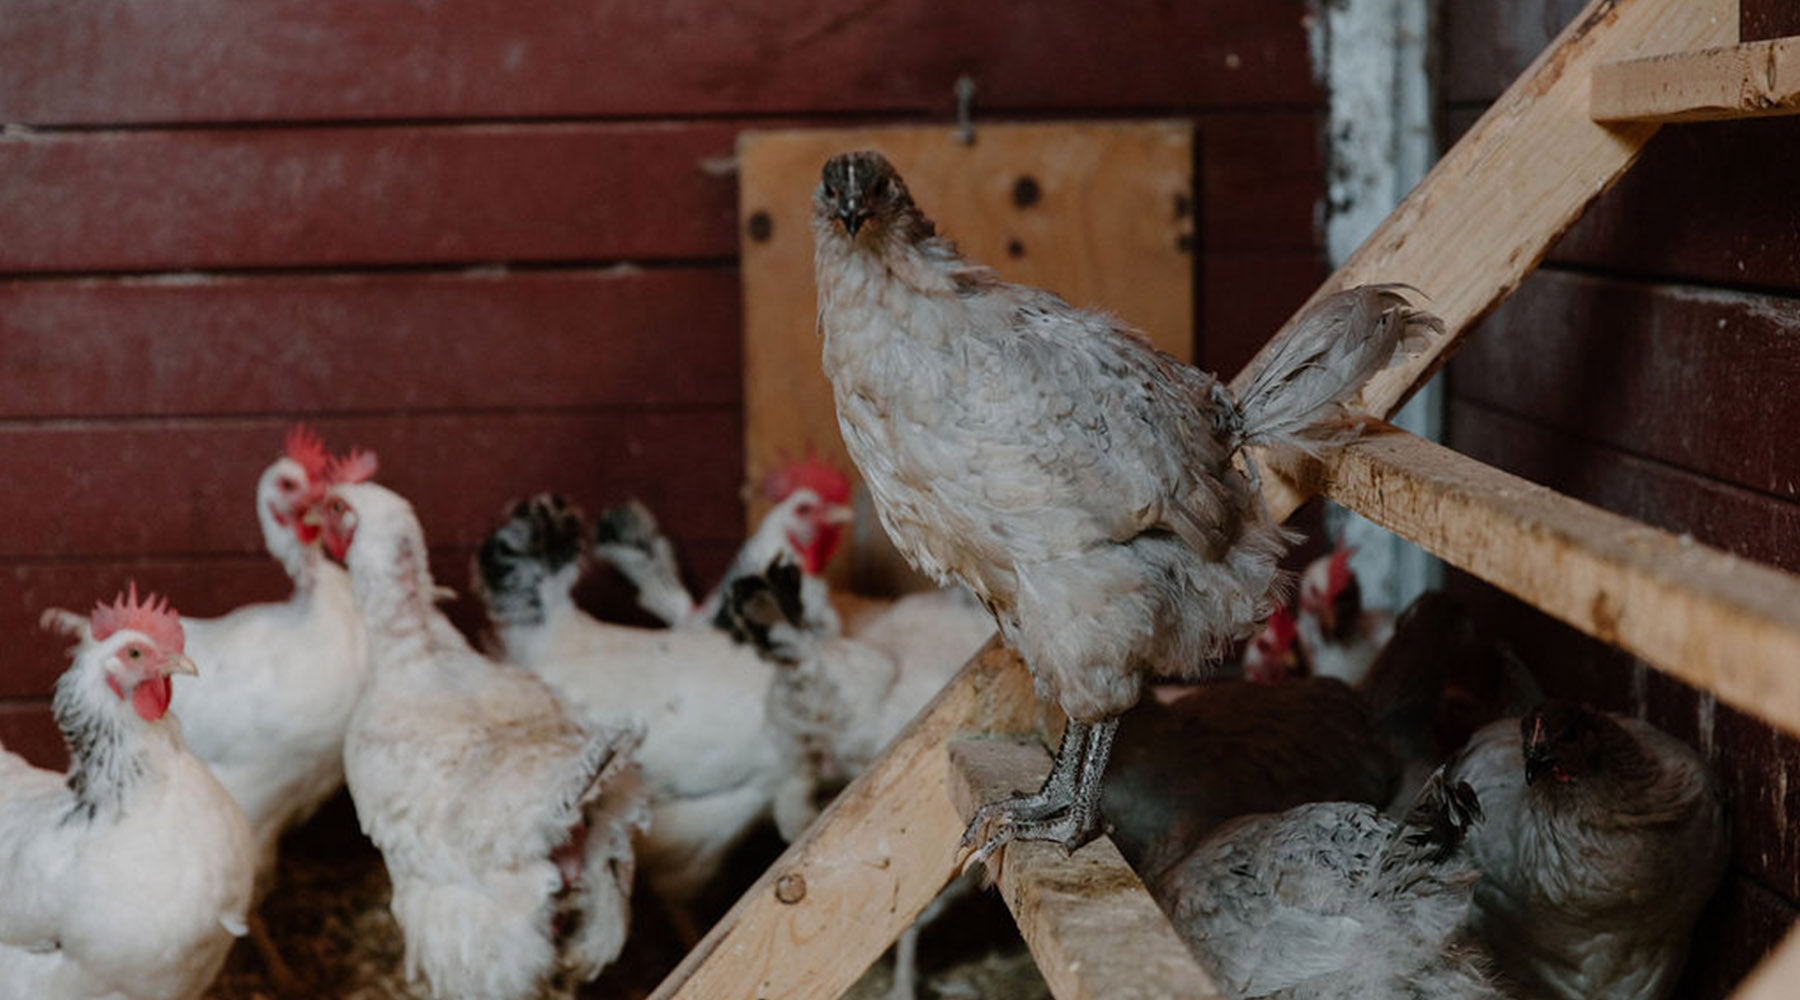 Raising healthy backyard chickens